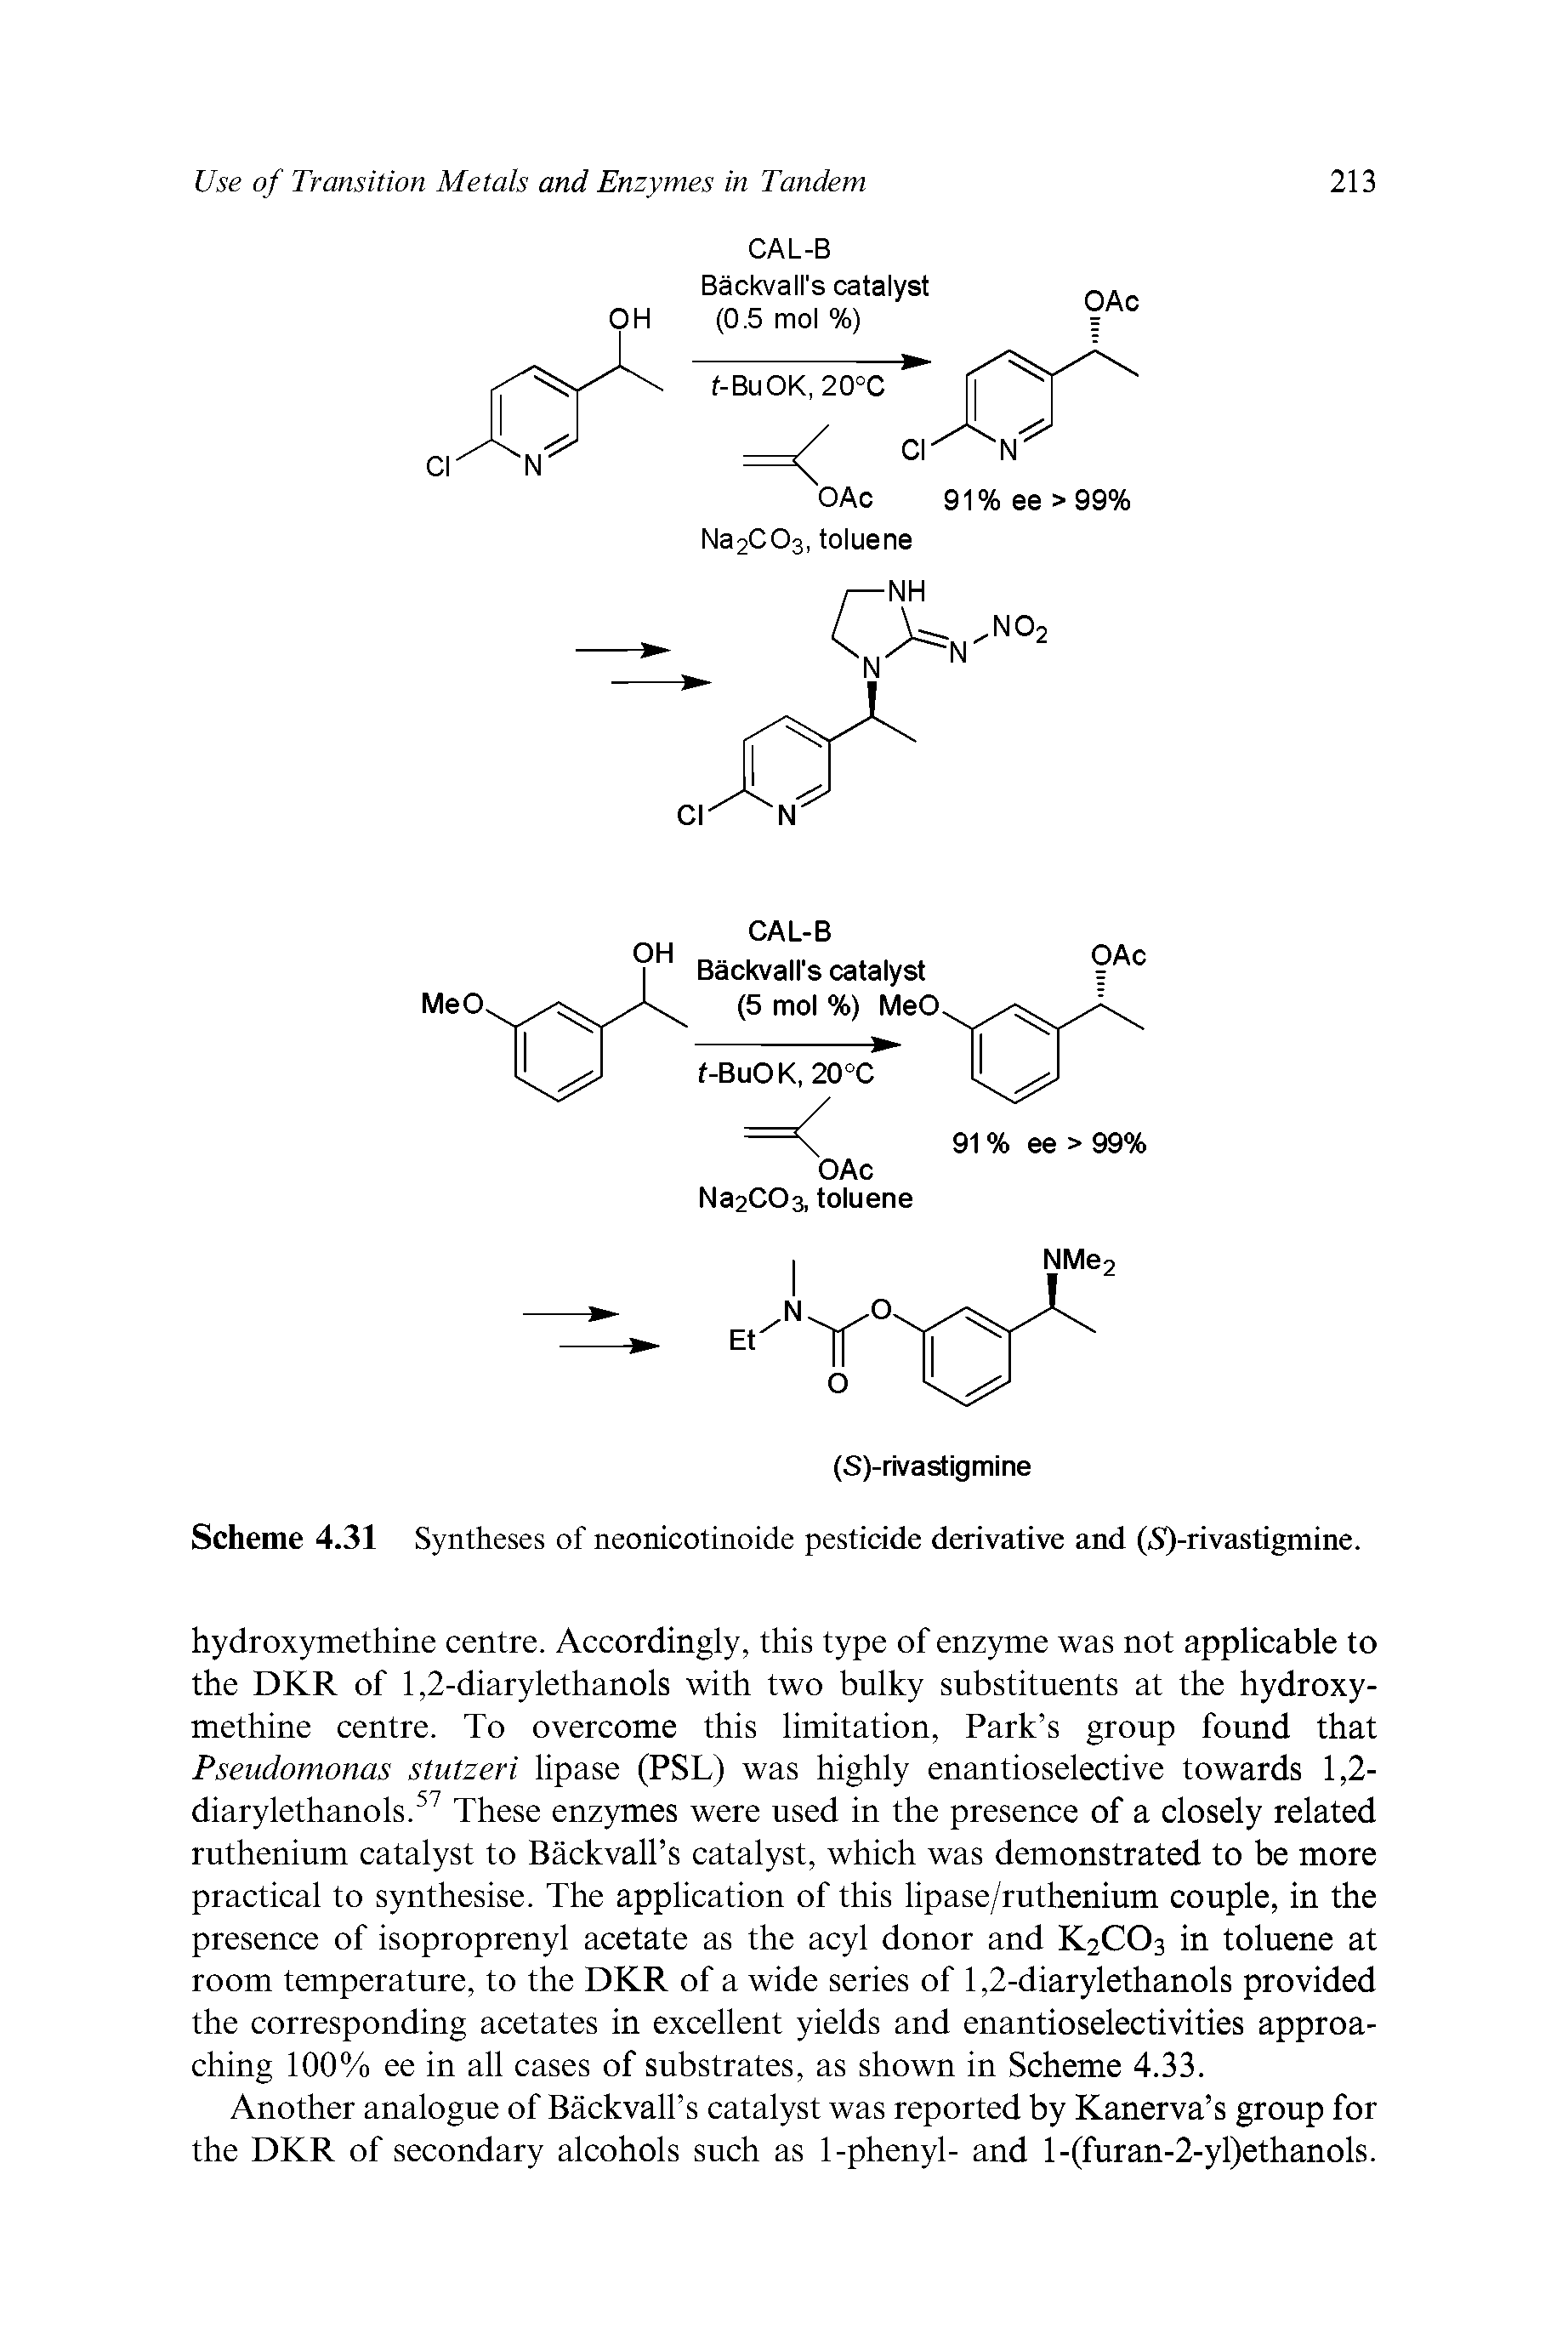 Scheme 4.31 Syntheses of neonicotinoide pesticide derivative and (S)-rivastigmine.